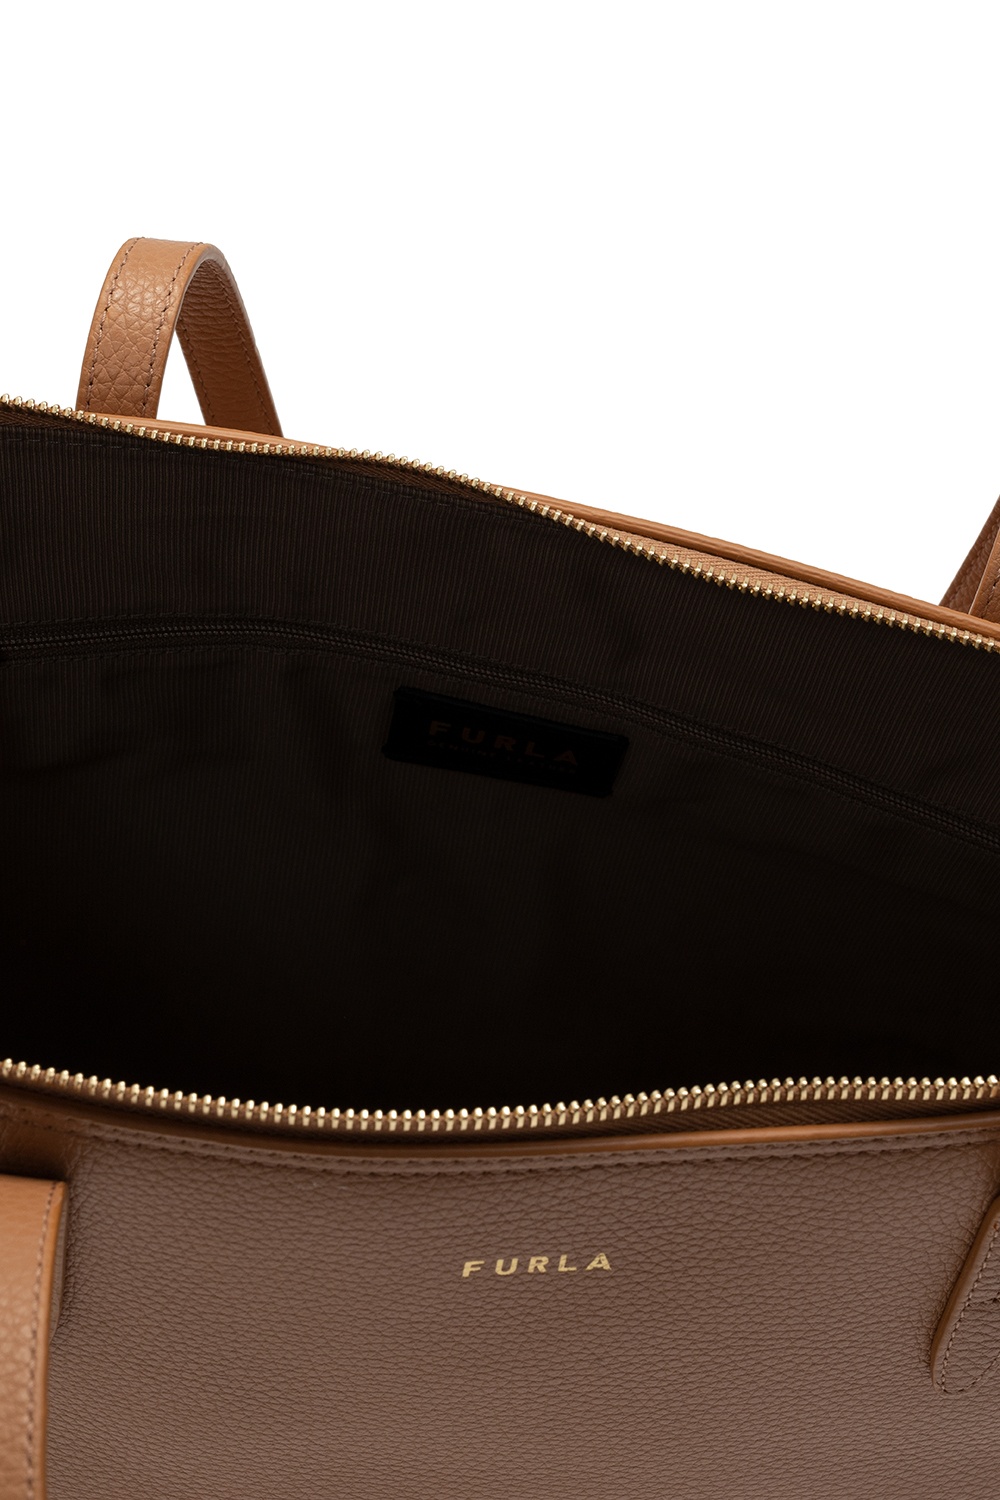 Totes bags Furla - Sleek H shoulder bag in brown - BZK6ABRHSF000O3B00